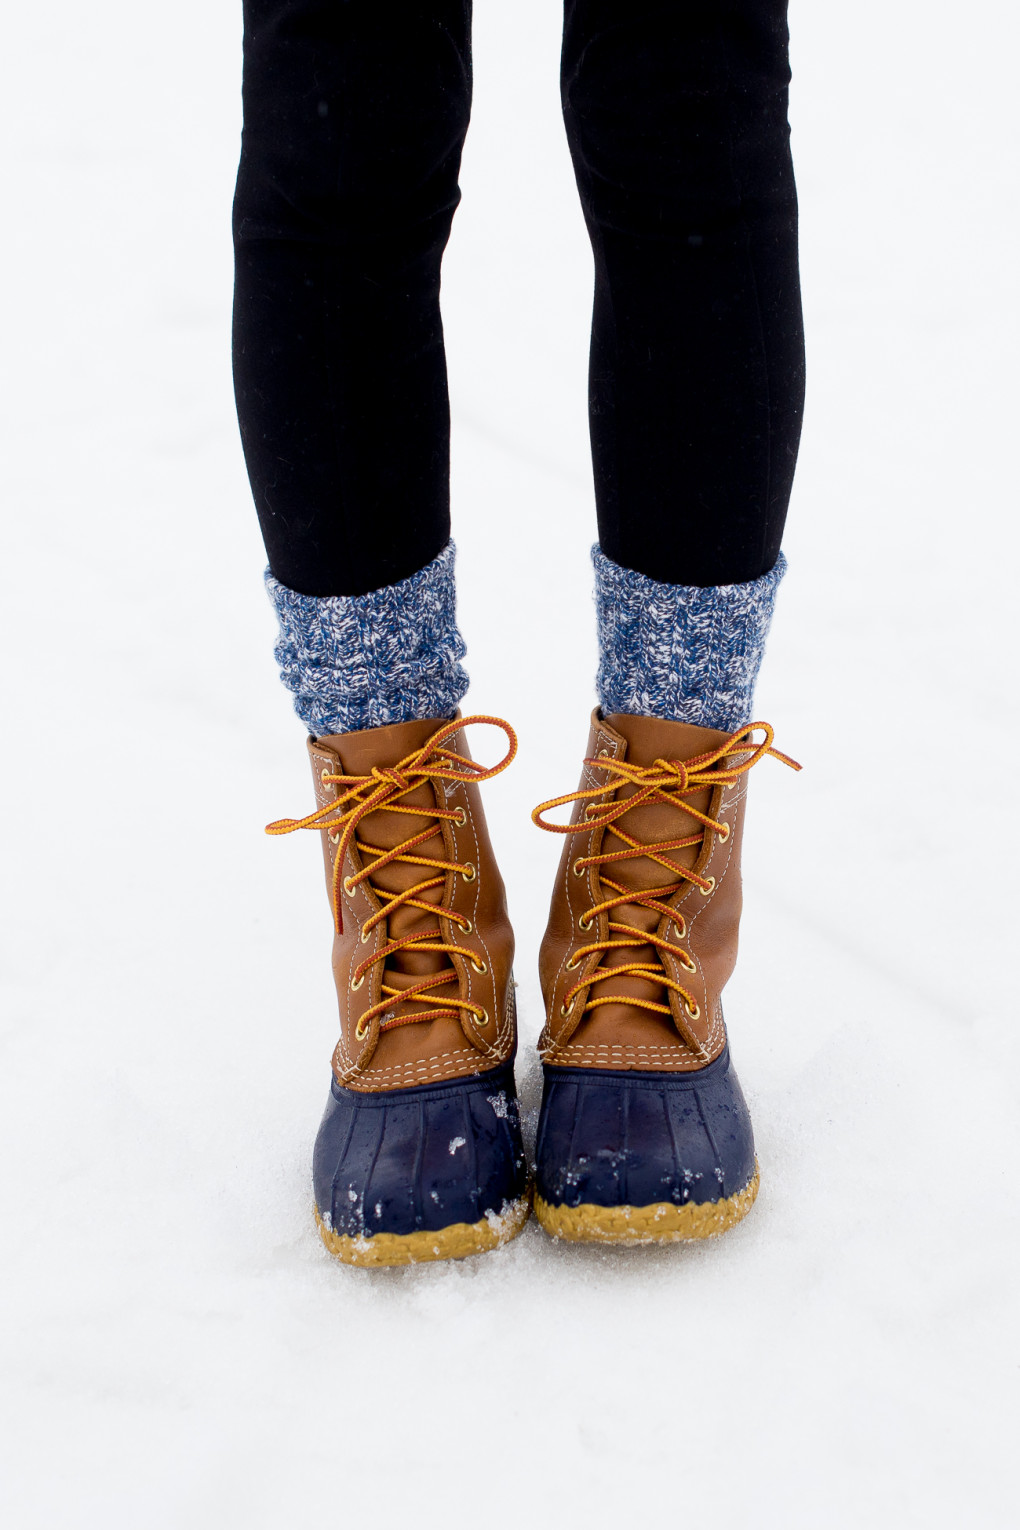 L.L.Bean Boots in Mount Snow, Vermont